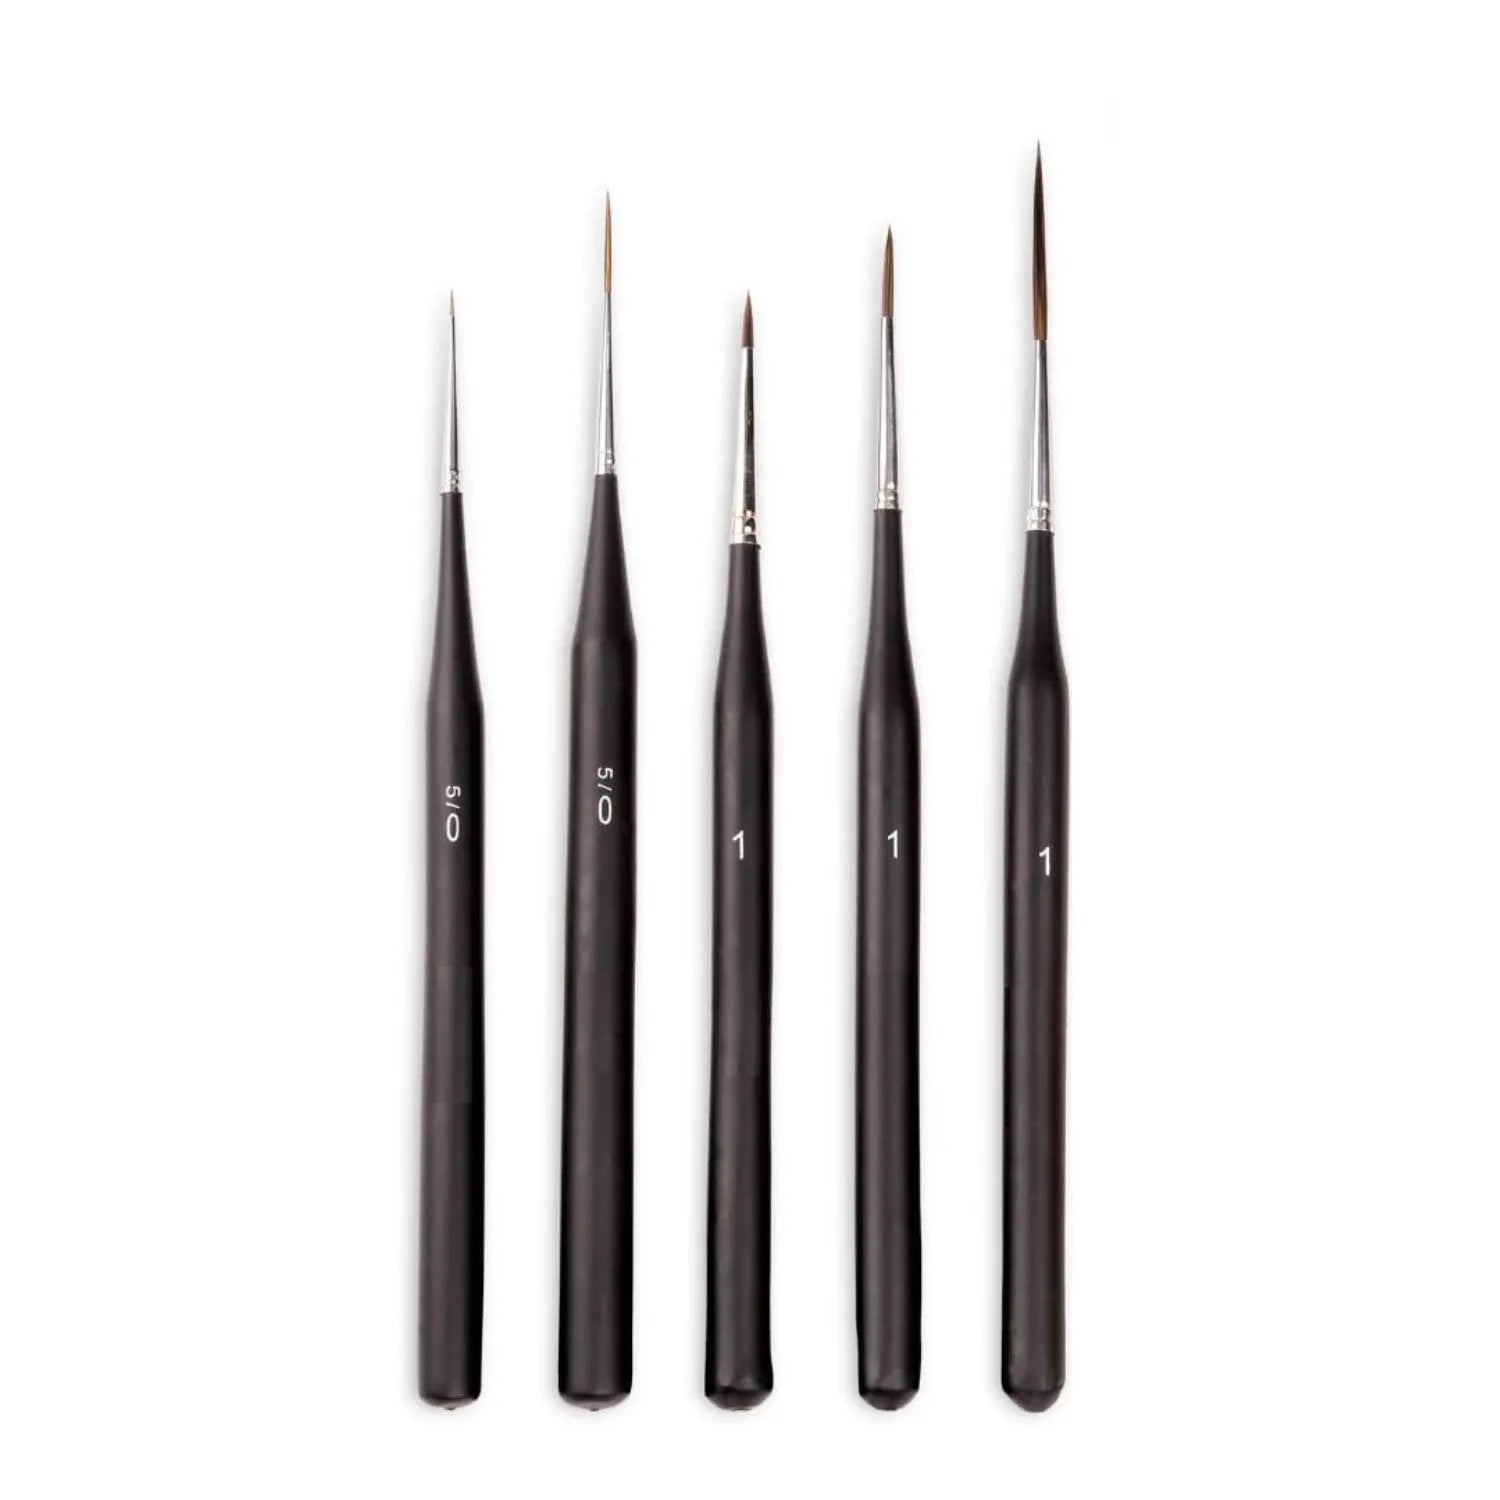 Canvazo Detailing Paint Brushes Set - 5pcs Professional Miniature Liner Brushes Canvazo